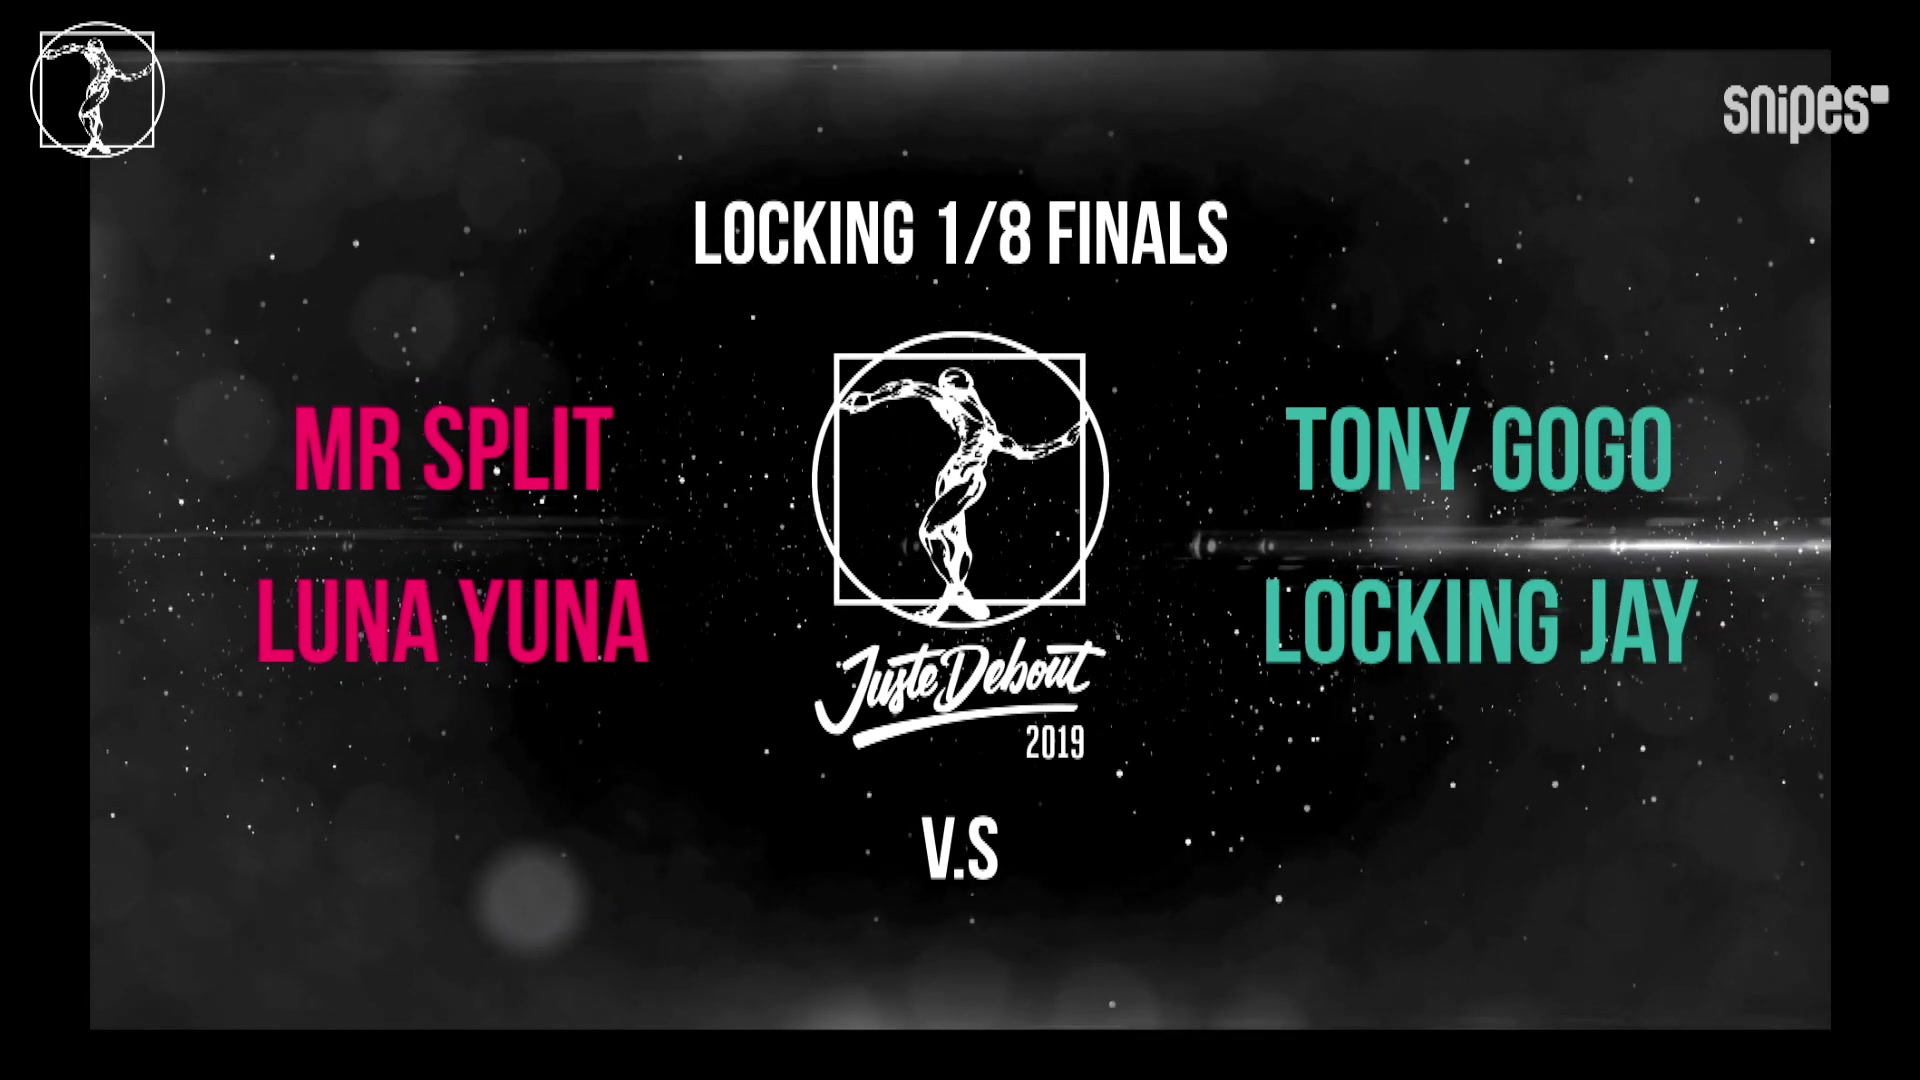 【Juste Debout 2019】 - Tony GoGo & Locking Jay vs Mr Split & Luna